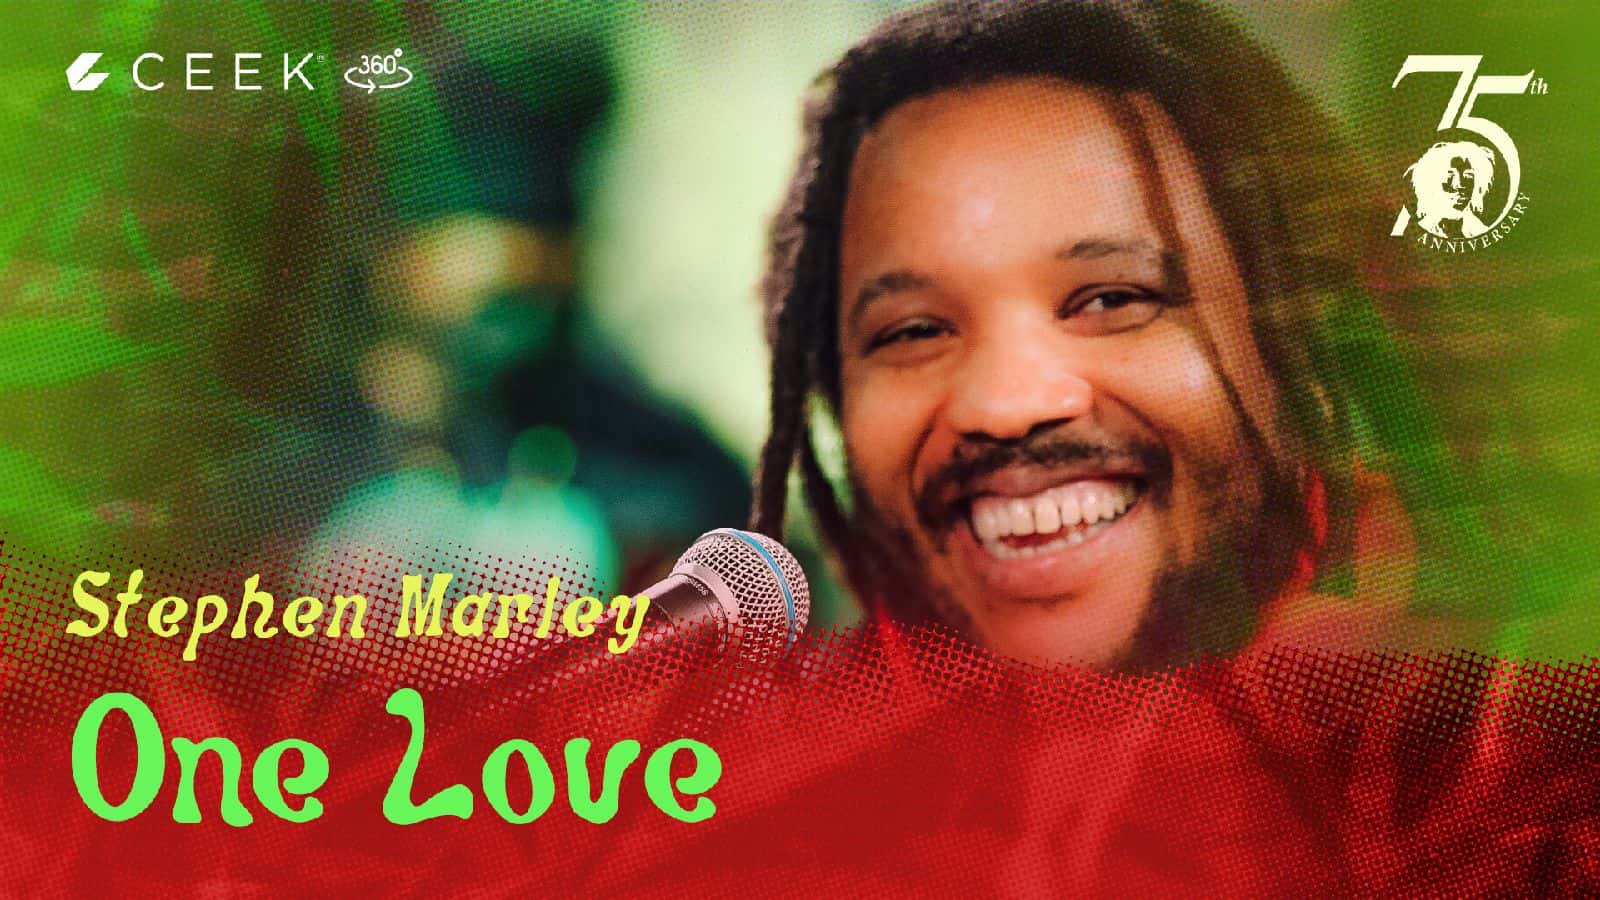 Stephen Marley 360 One Love